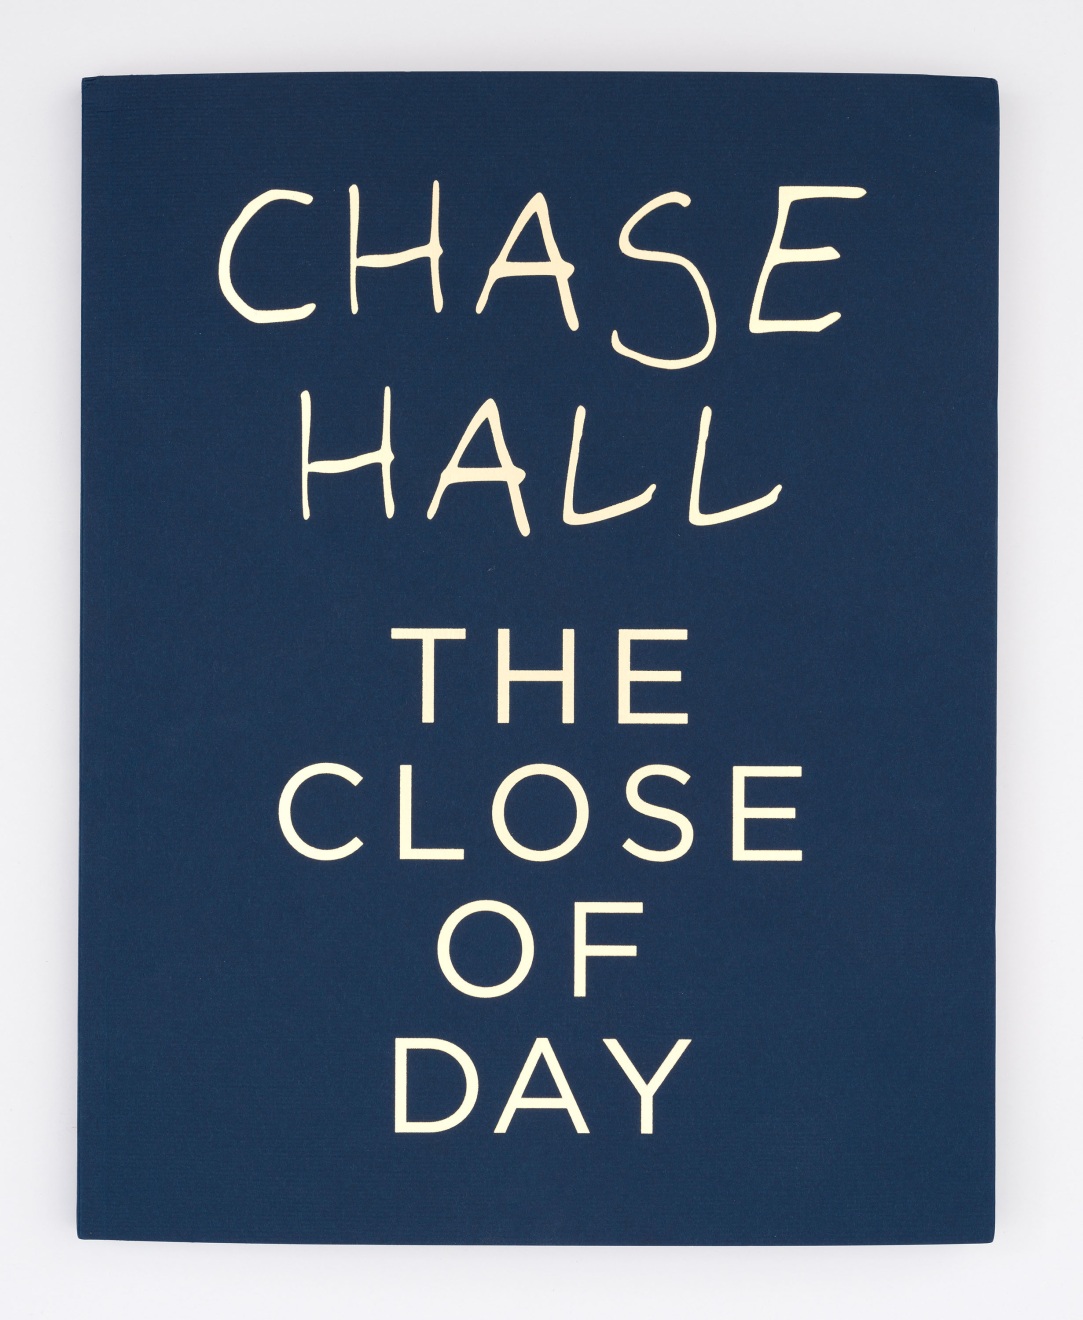 Chase Hall